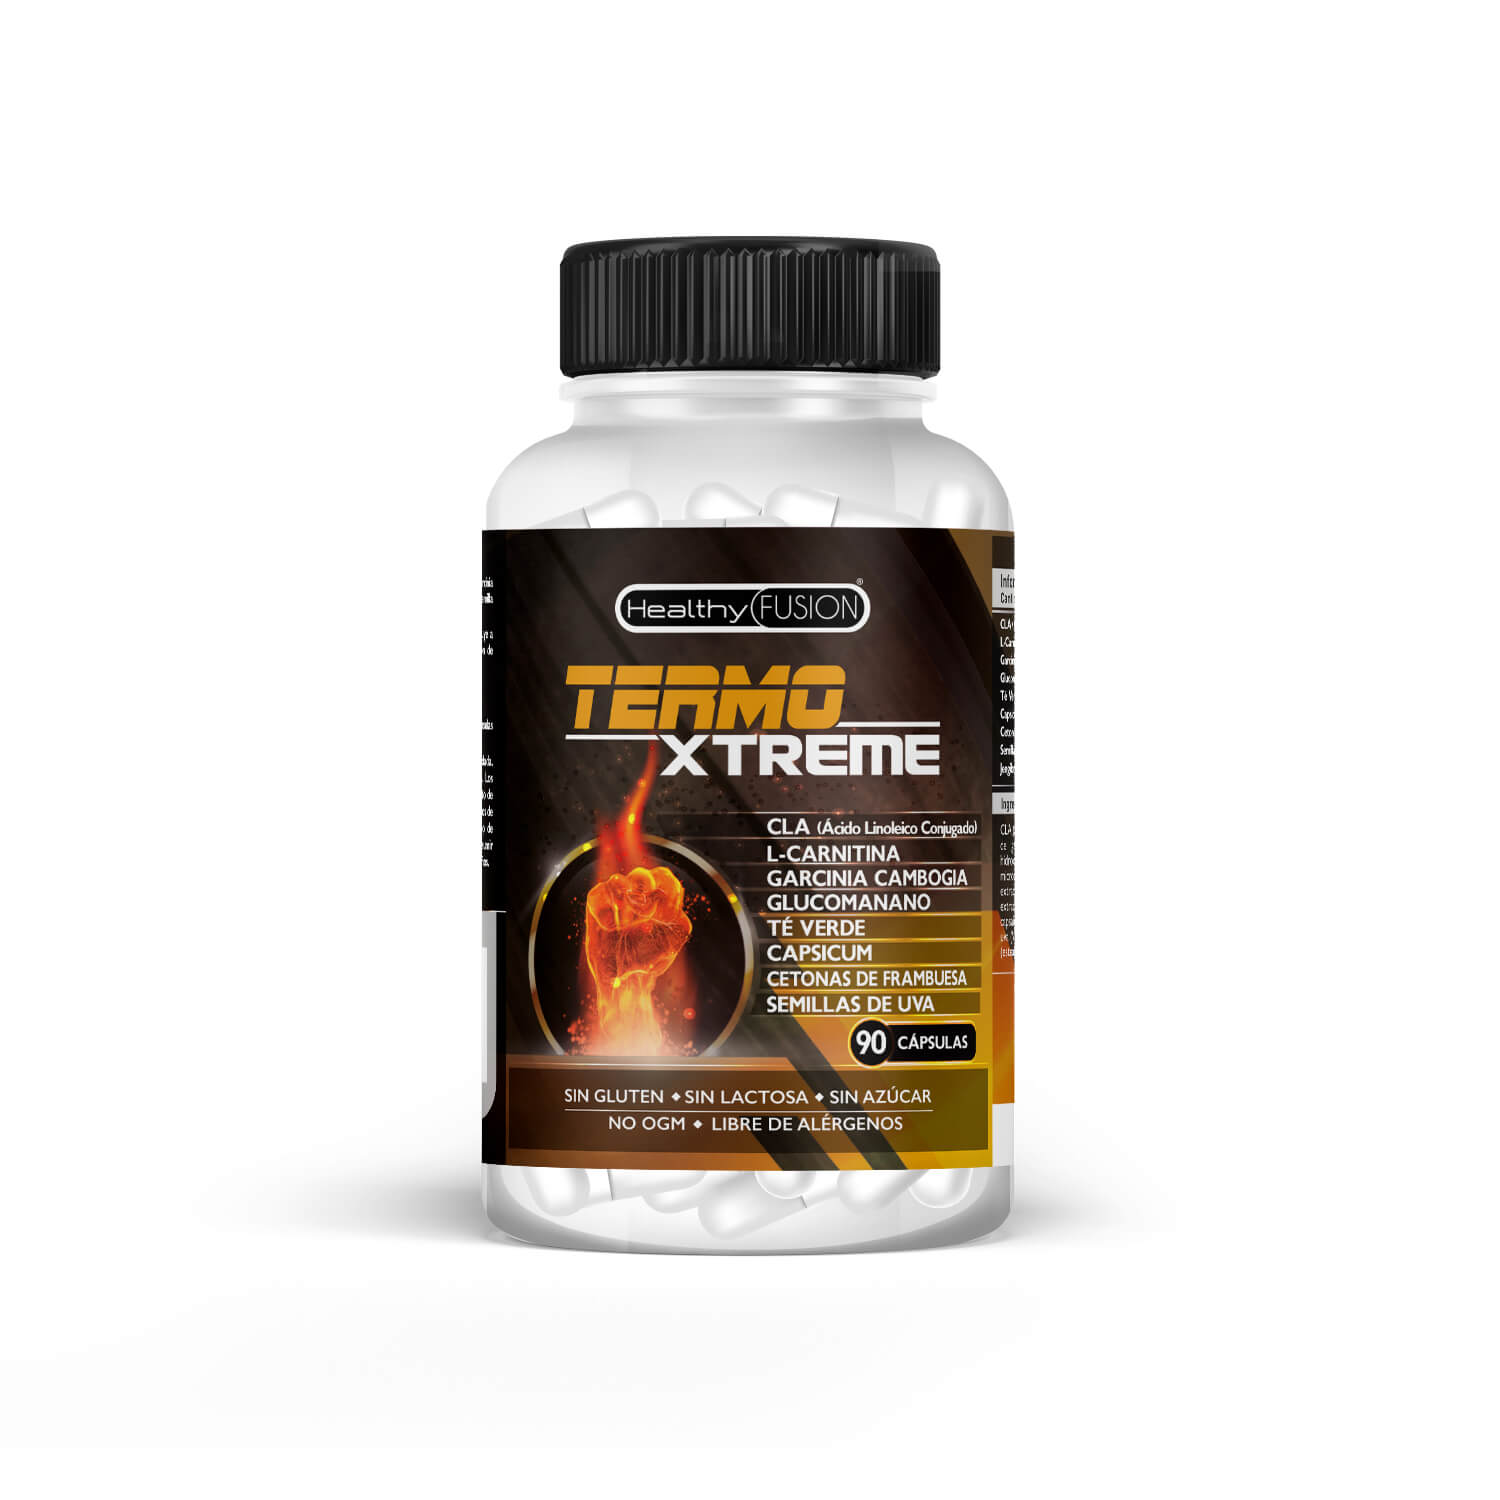 Healthy Fusion - TermoXtreme